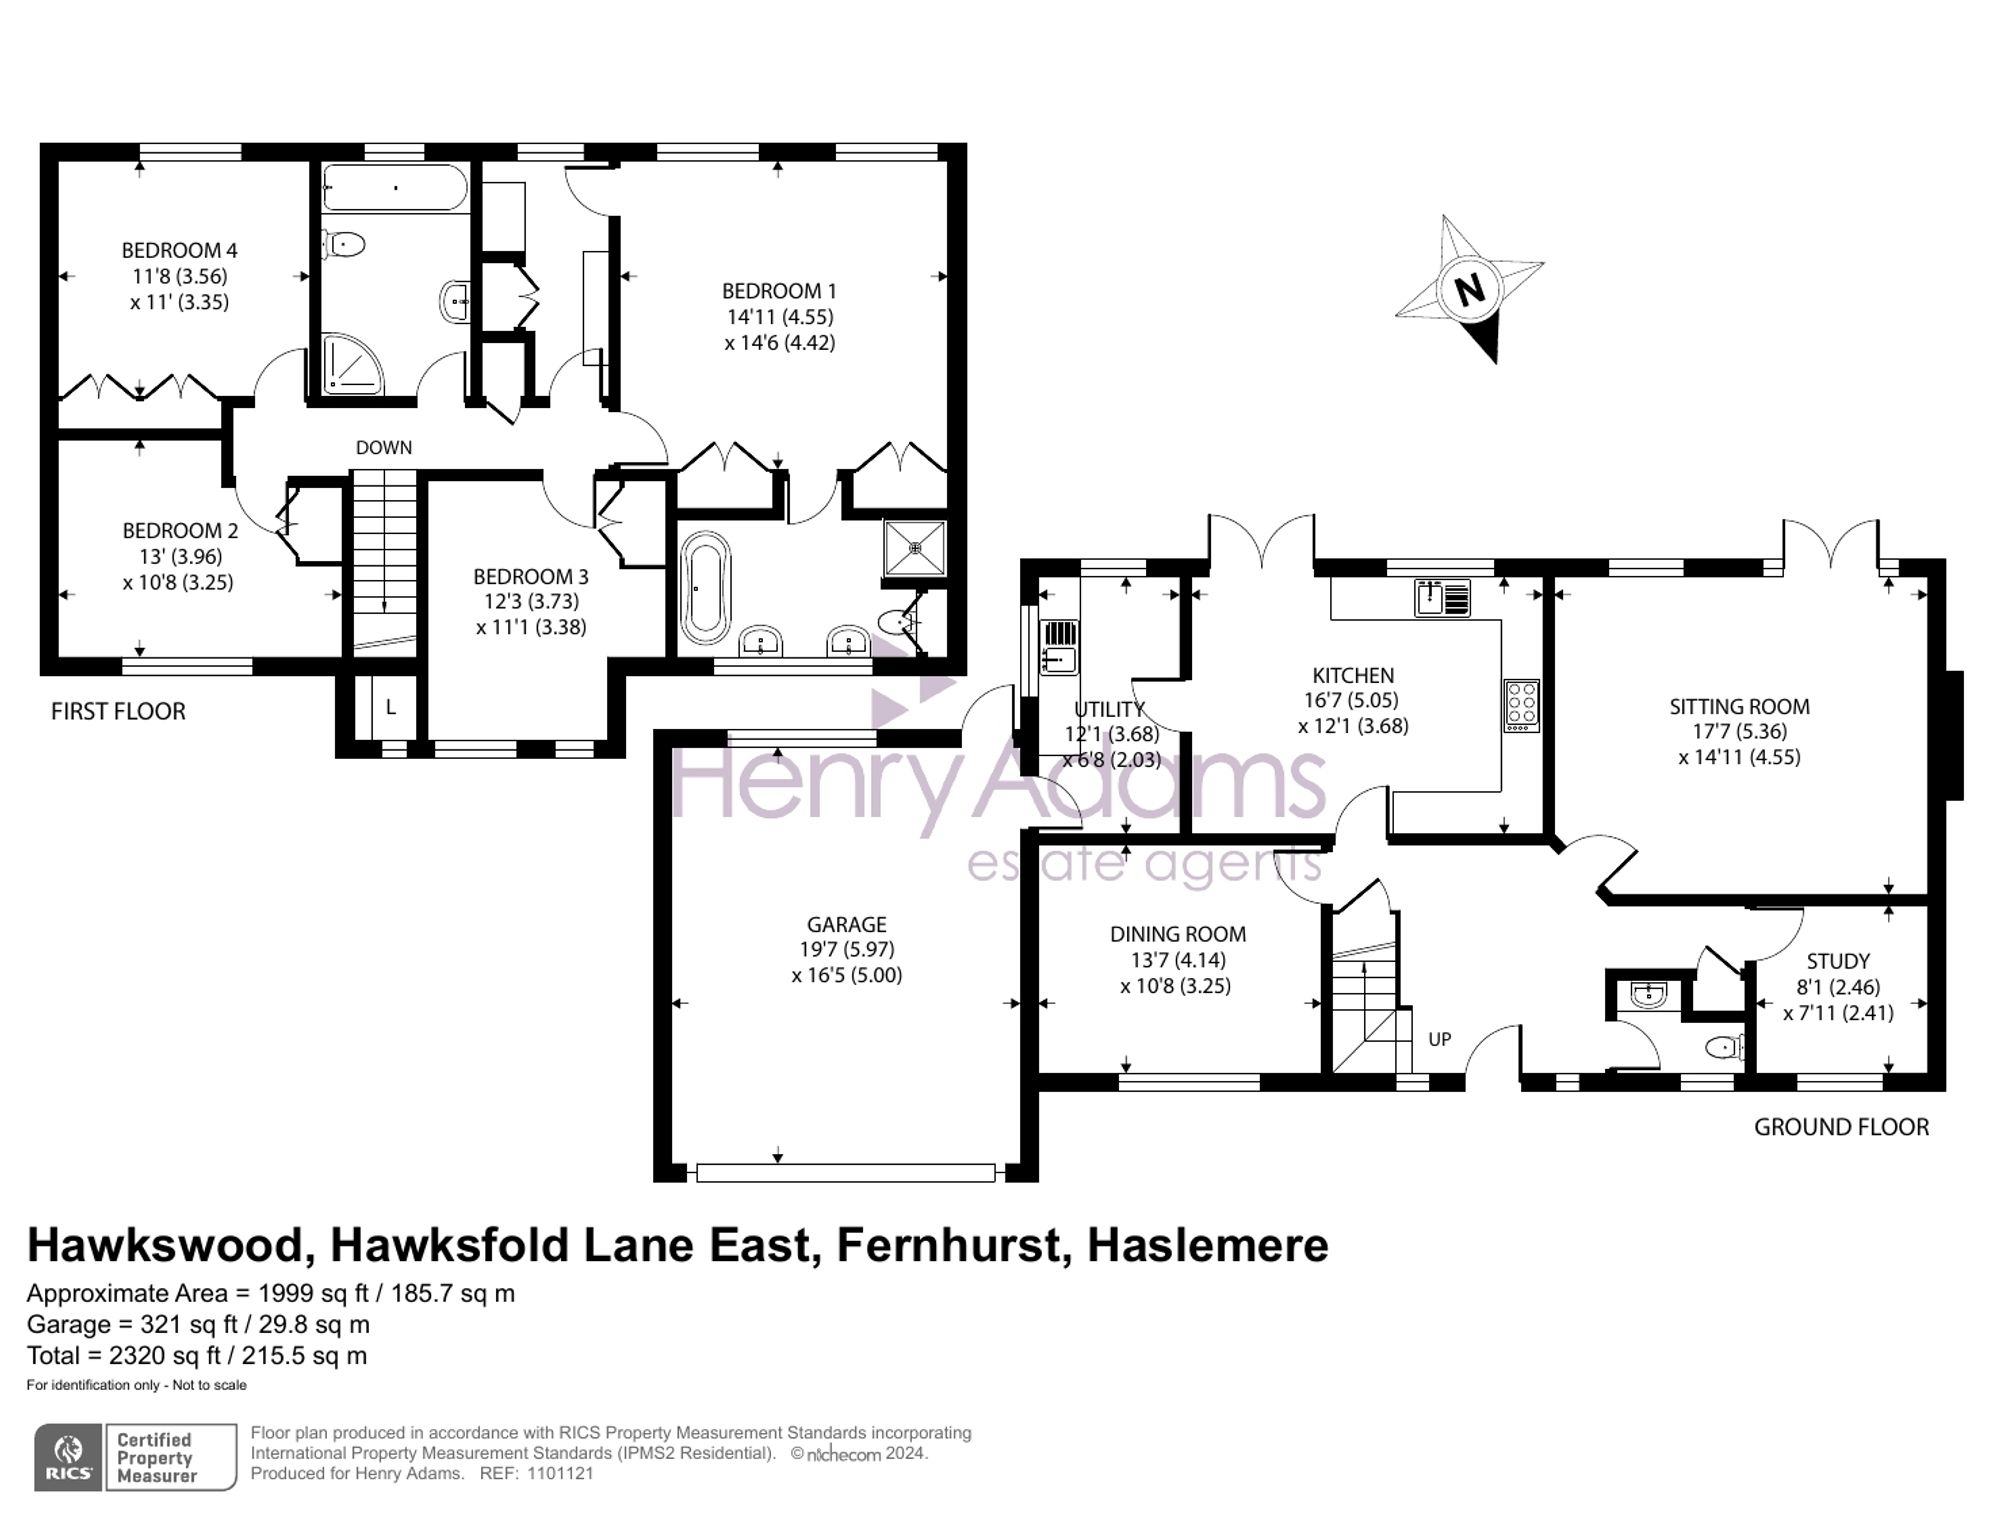 Hawksfold Lane East, Fernhurst, GU27 floorplans